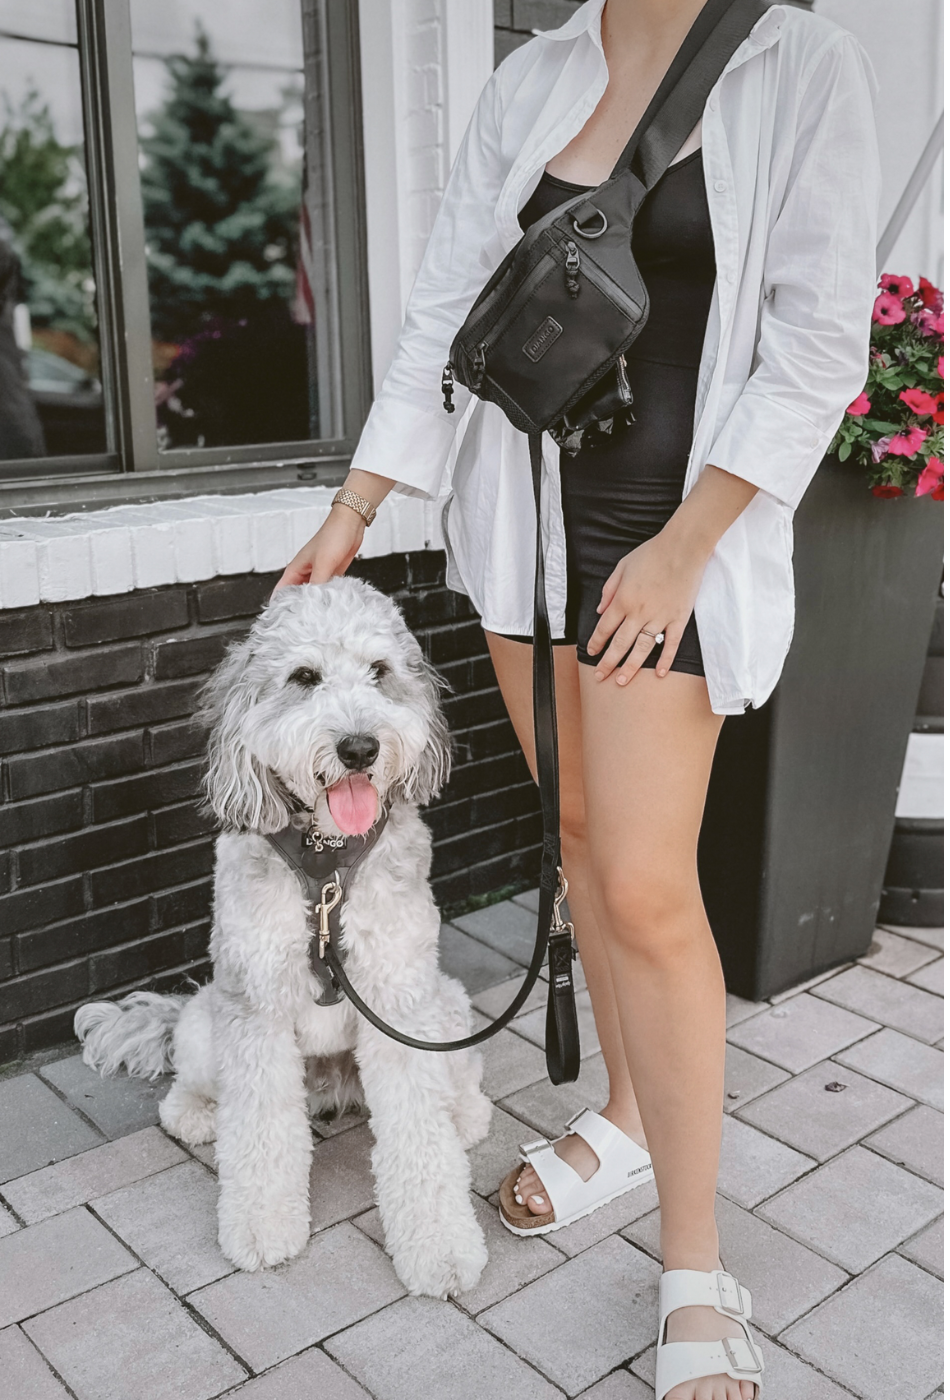 DJANGO Nolita Belt Bag in Black - Modern, sleek, ultra-functional, and dog-friendly nylon fanny pack for everyday outings and adventures - djangobrand.com